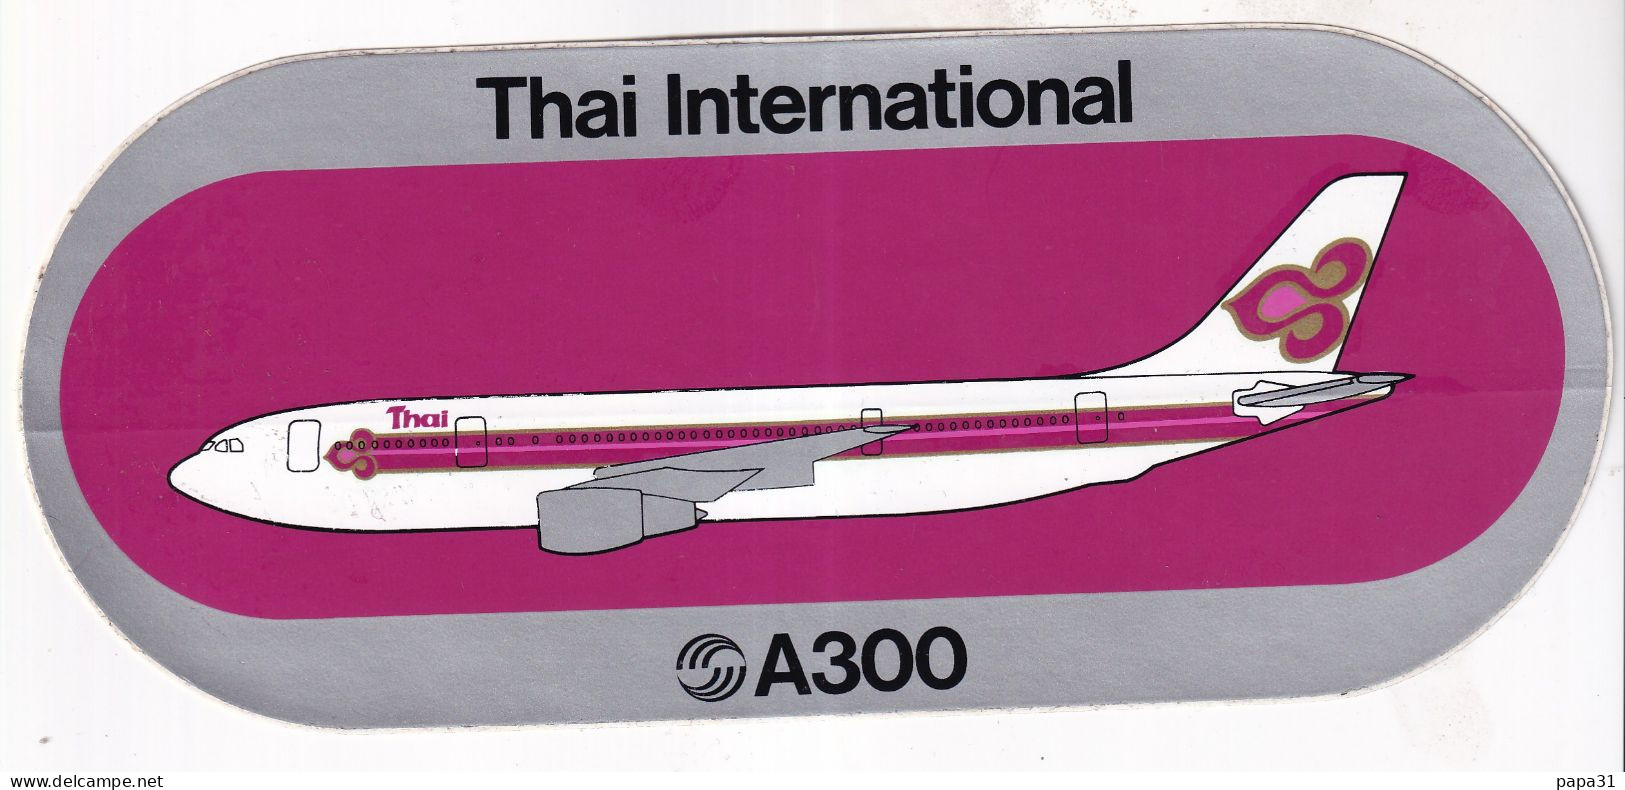 Autocollant Avion -  Thai International  A300 - Autocollants